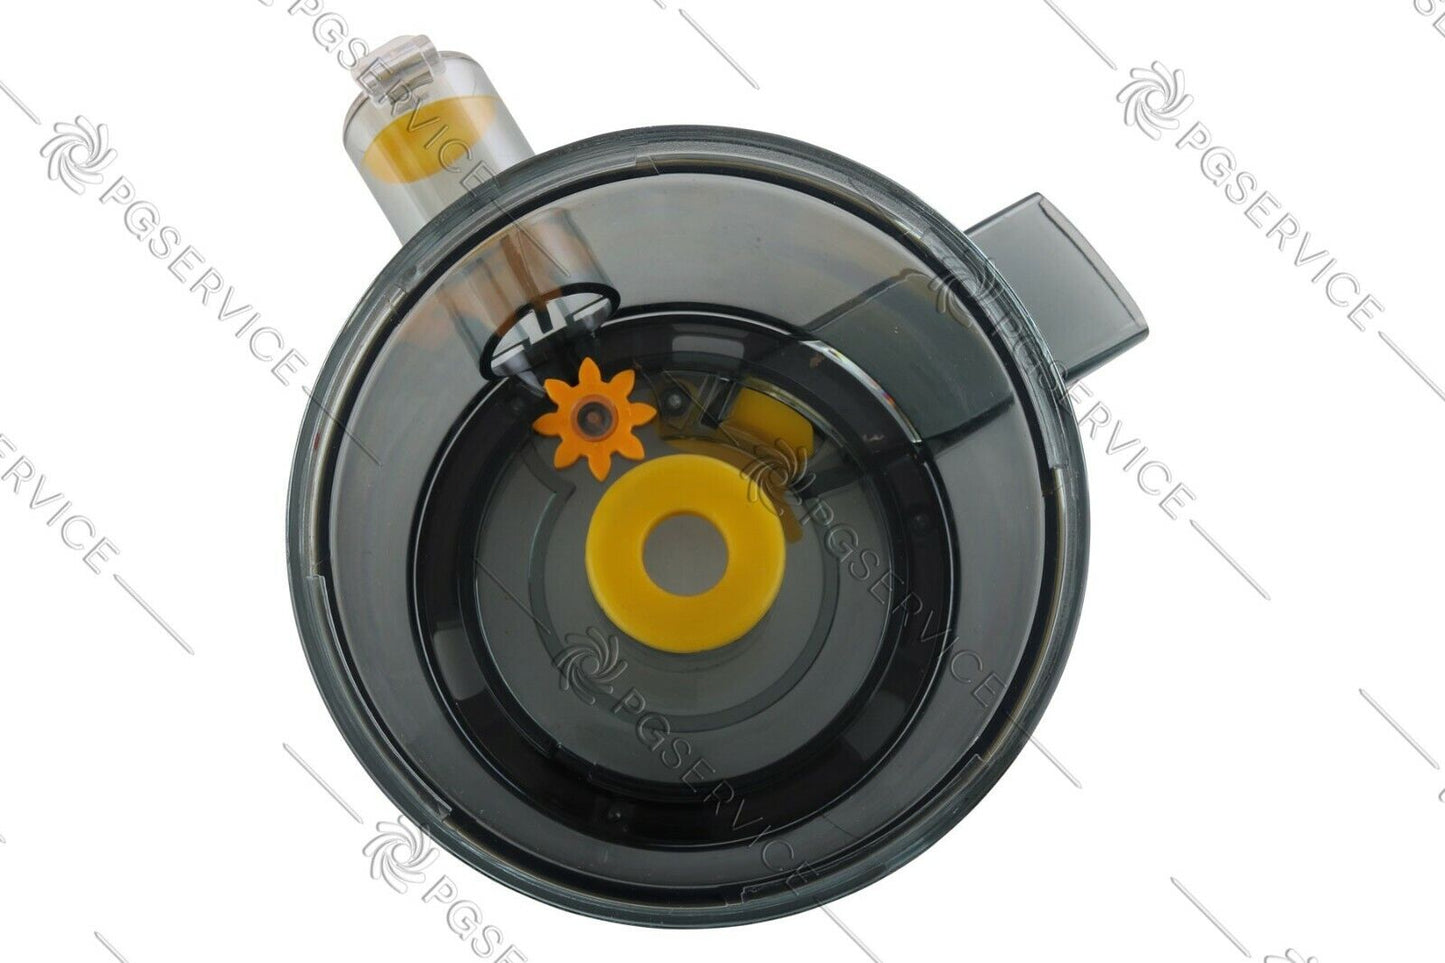 RGV ciotola vasca estrattore centrifuga Juice Art Plus 110361 Muscle 110781